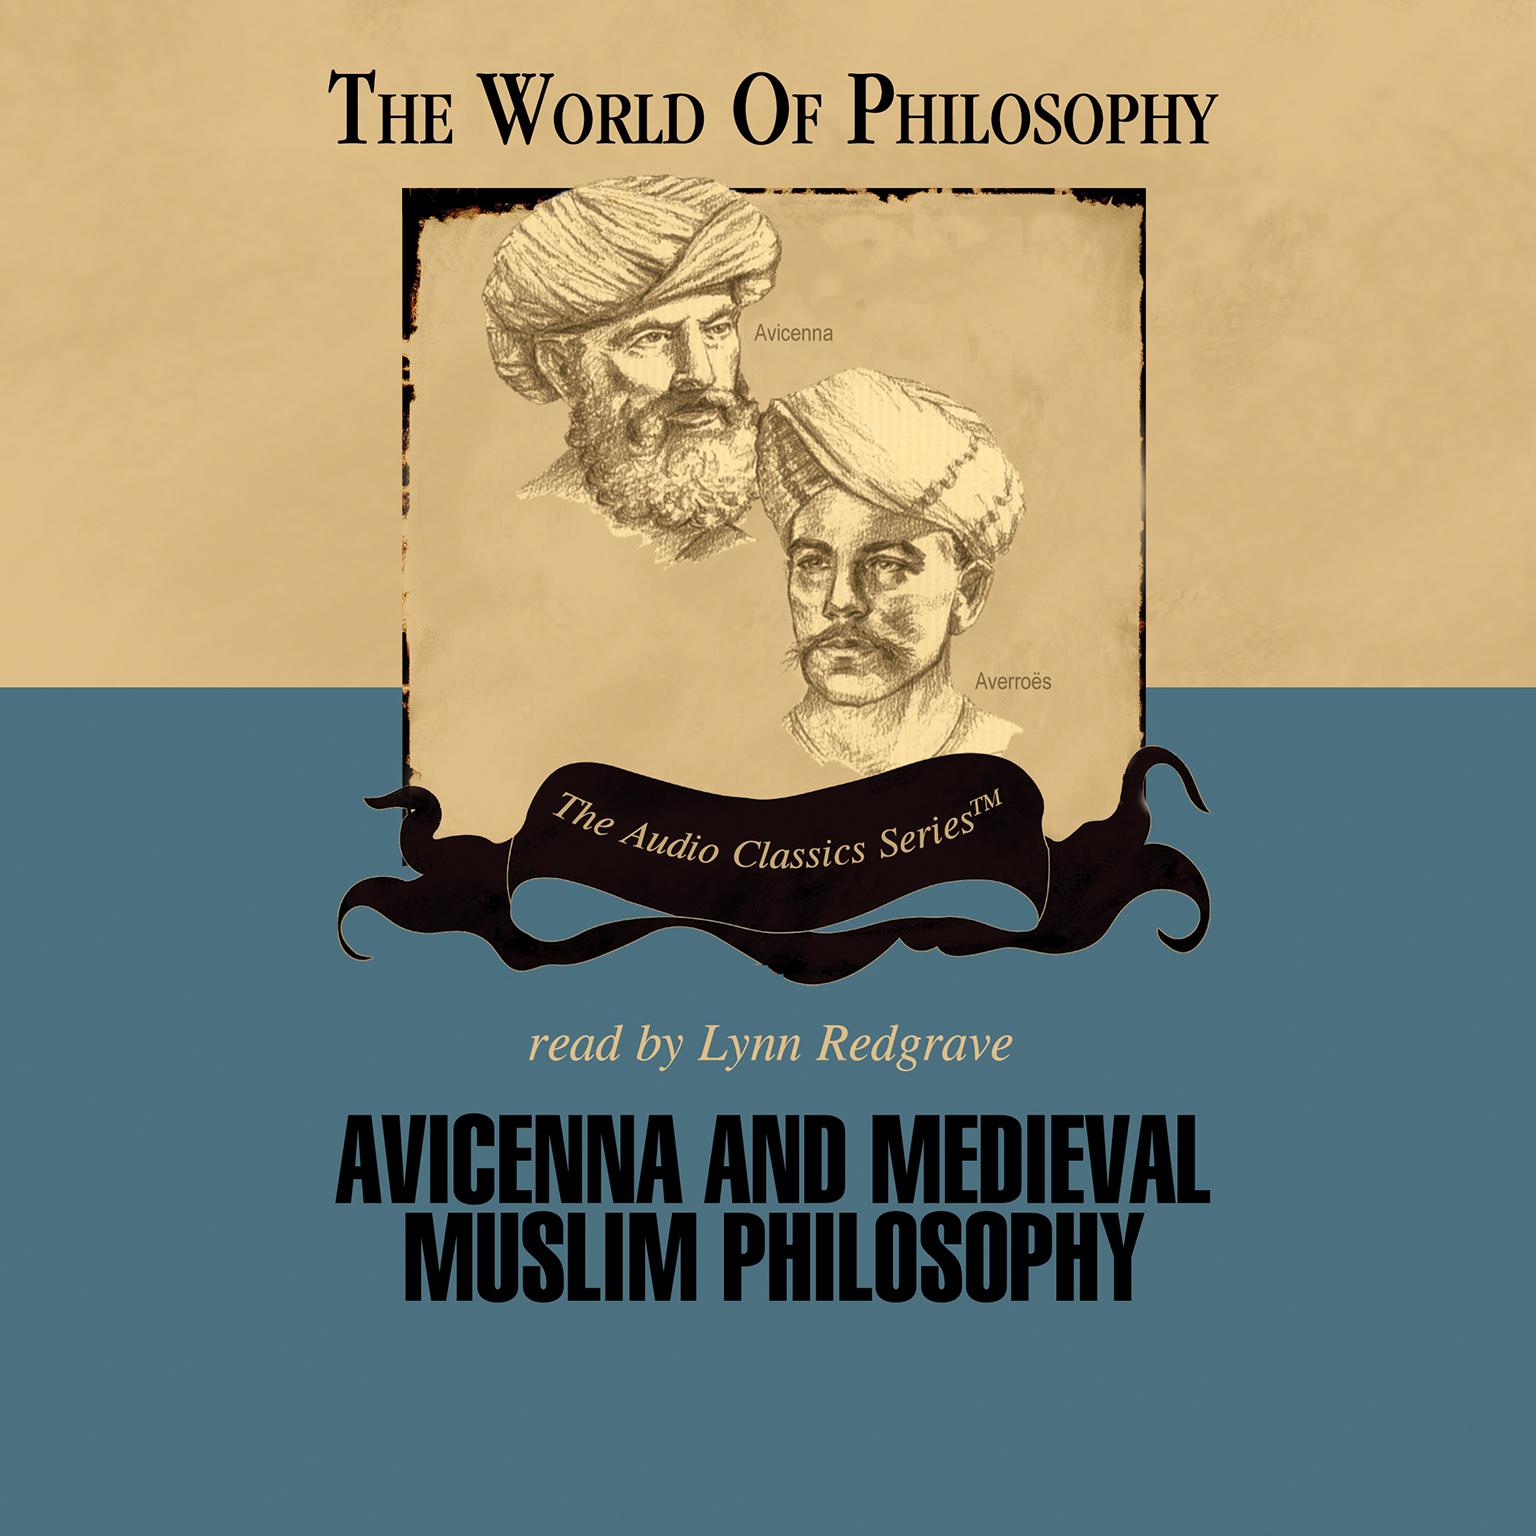 Avicenna and Medieval Muslim Philosophy Audiobook, by Thomas Gaskill